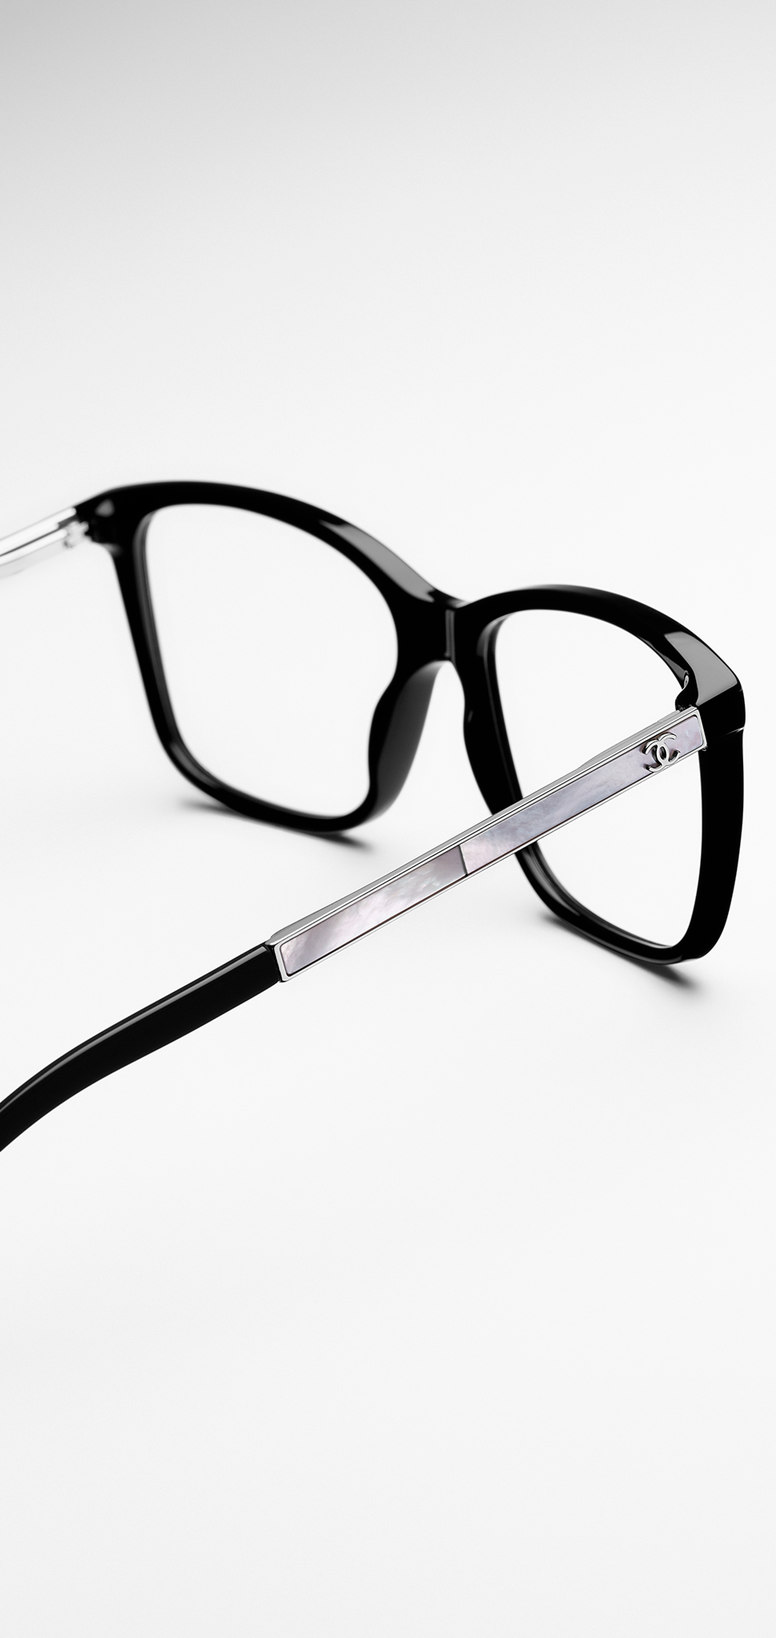 Chanel Eyewear - Beauty, Art and Function - Martin Reynolds Opticians